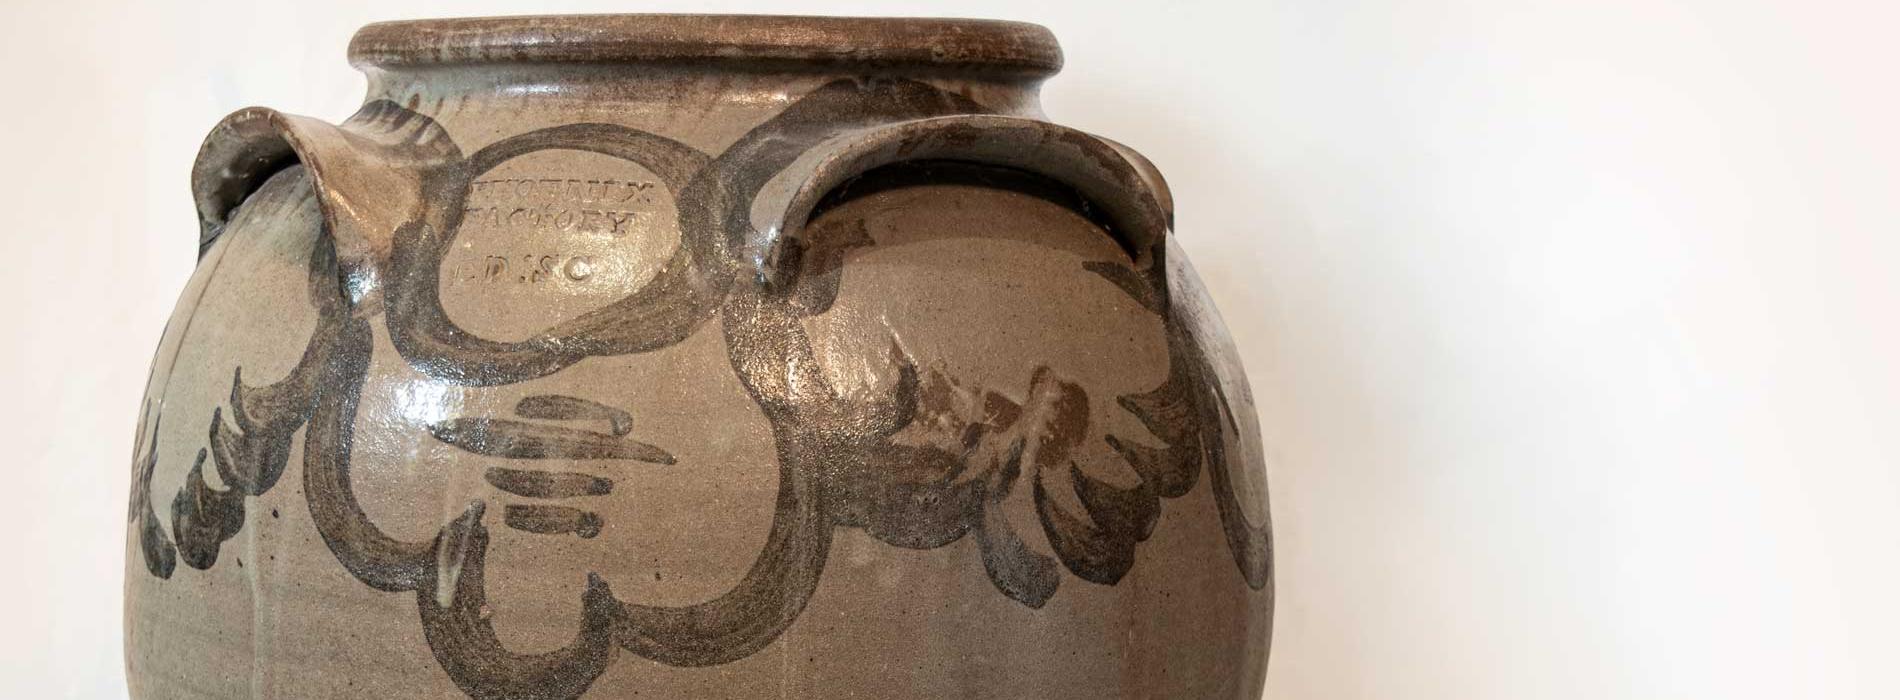 Edgefield pottery orr jar